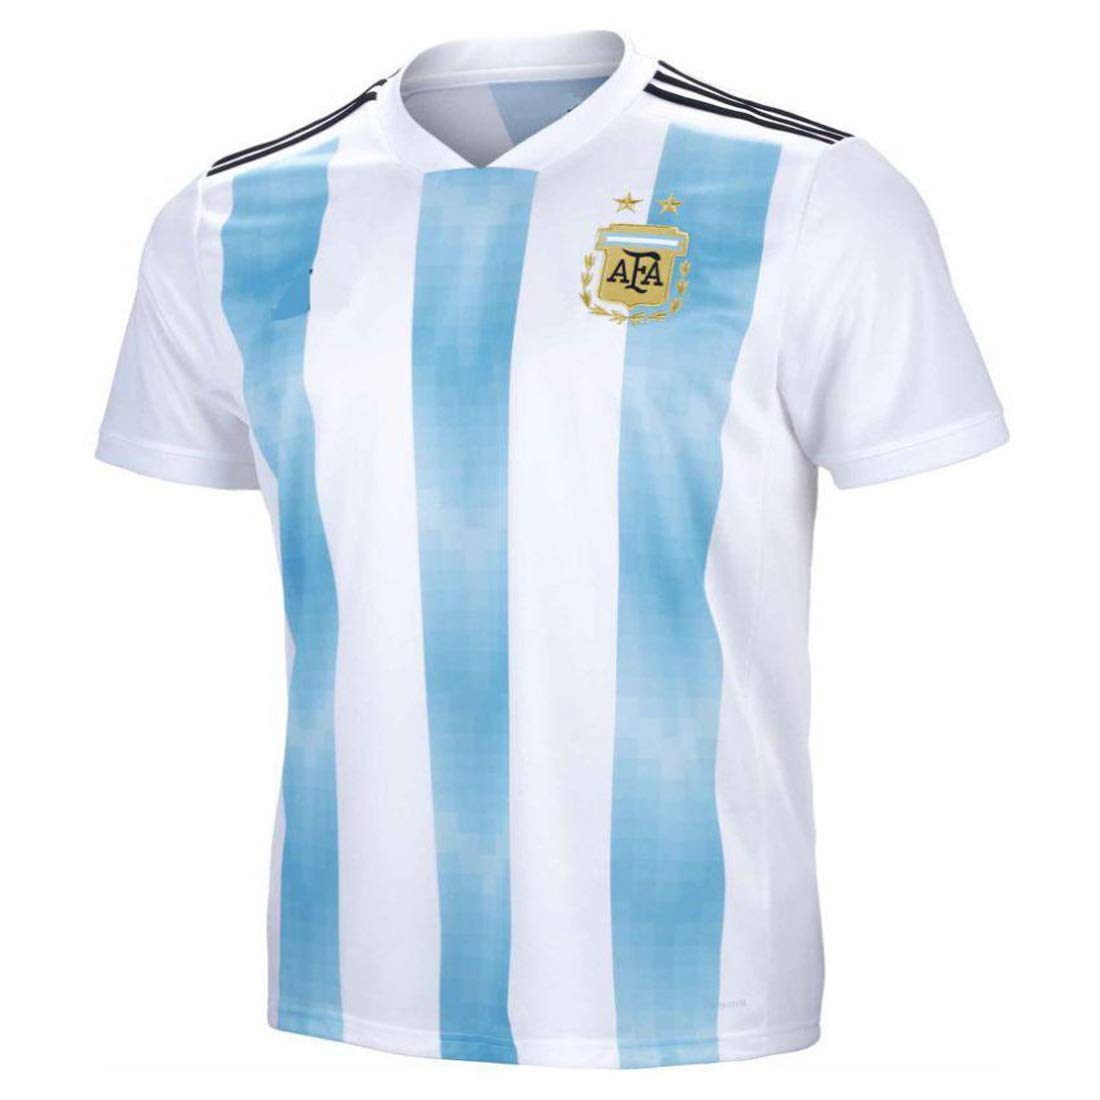 Buy argentina jersey online 